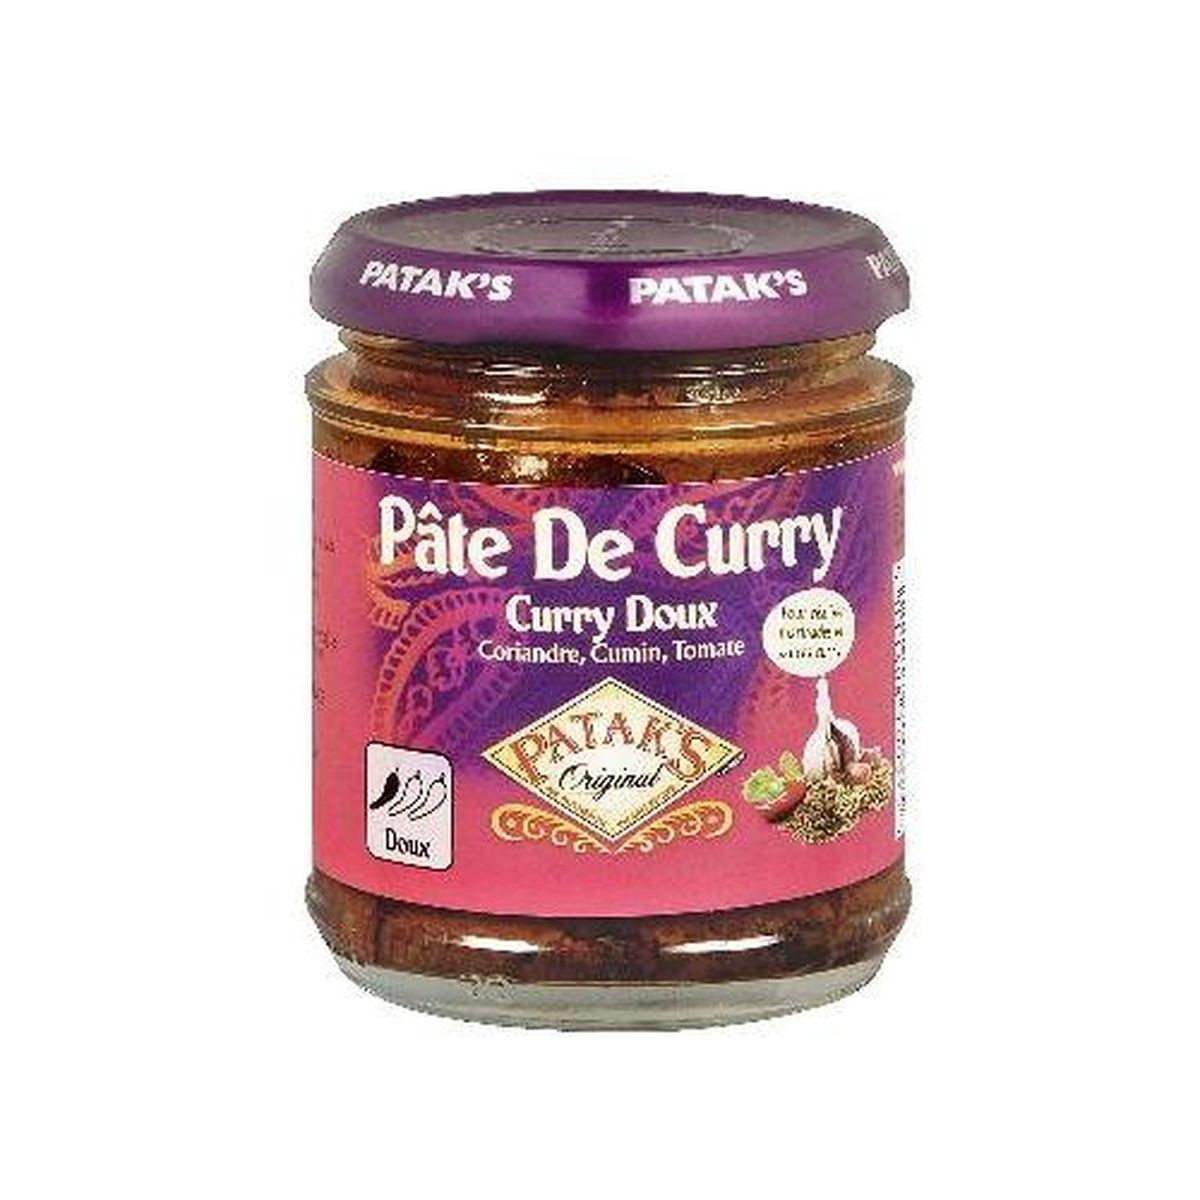 Patak's Pataks pate de curry doux 165g 